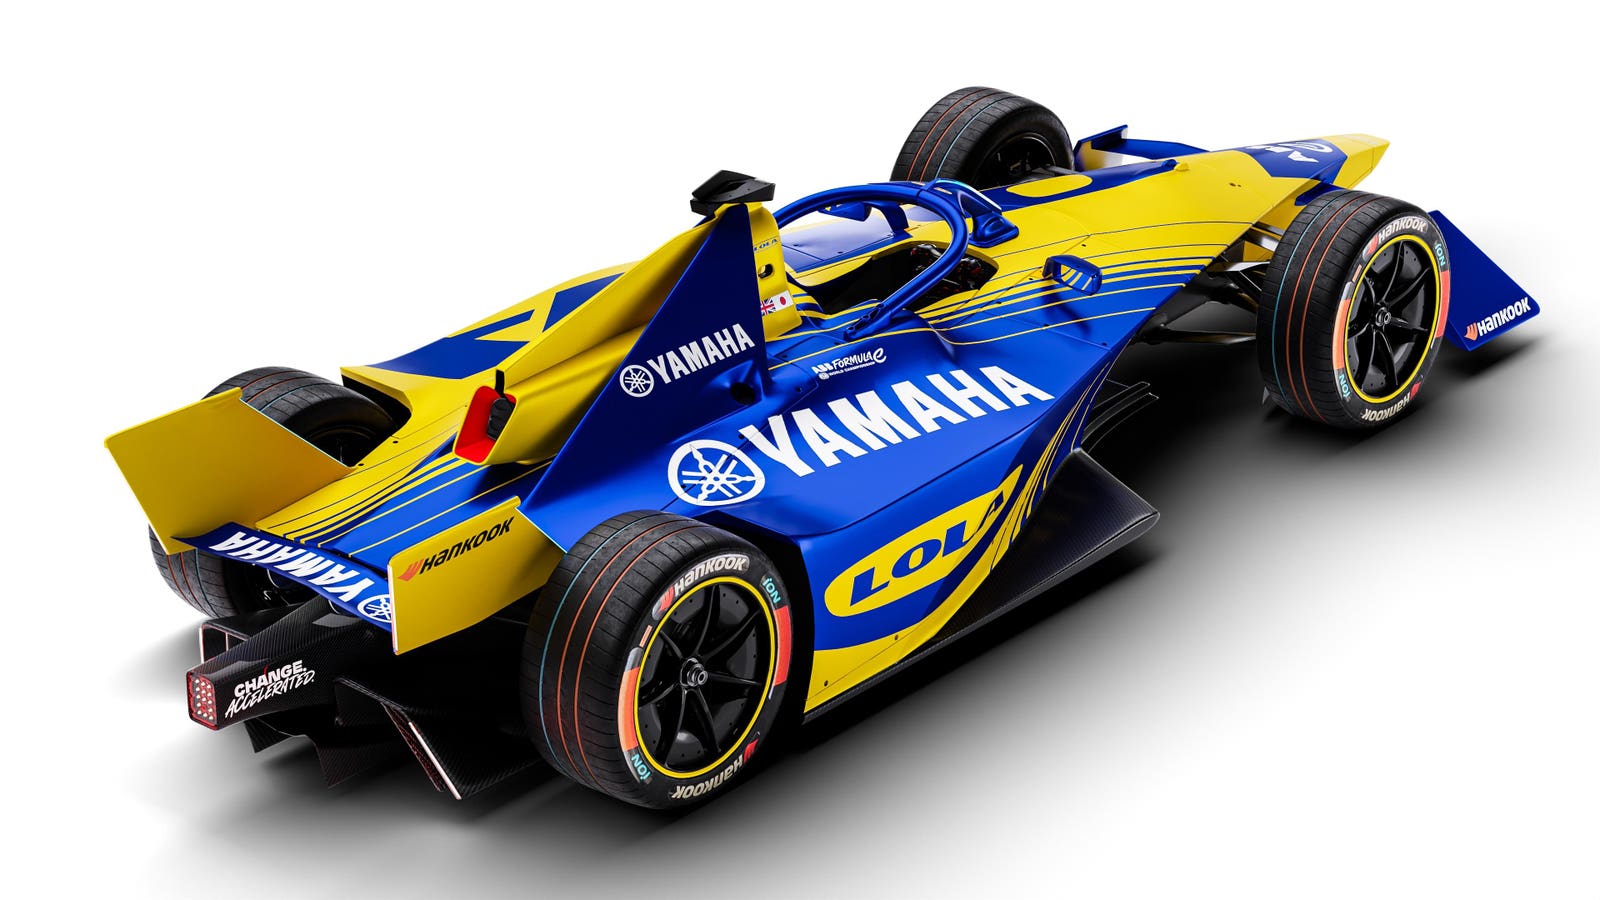 Lola Cars Partnering With Yamaha To Enter Formula E Racing Series